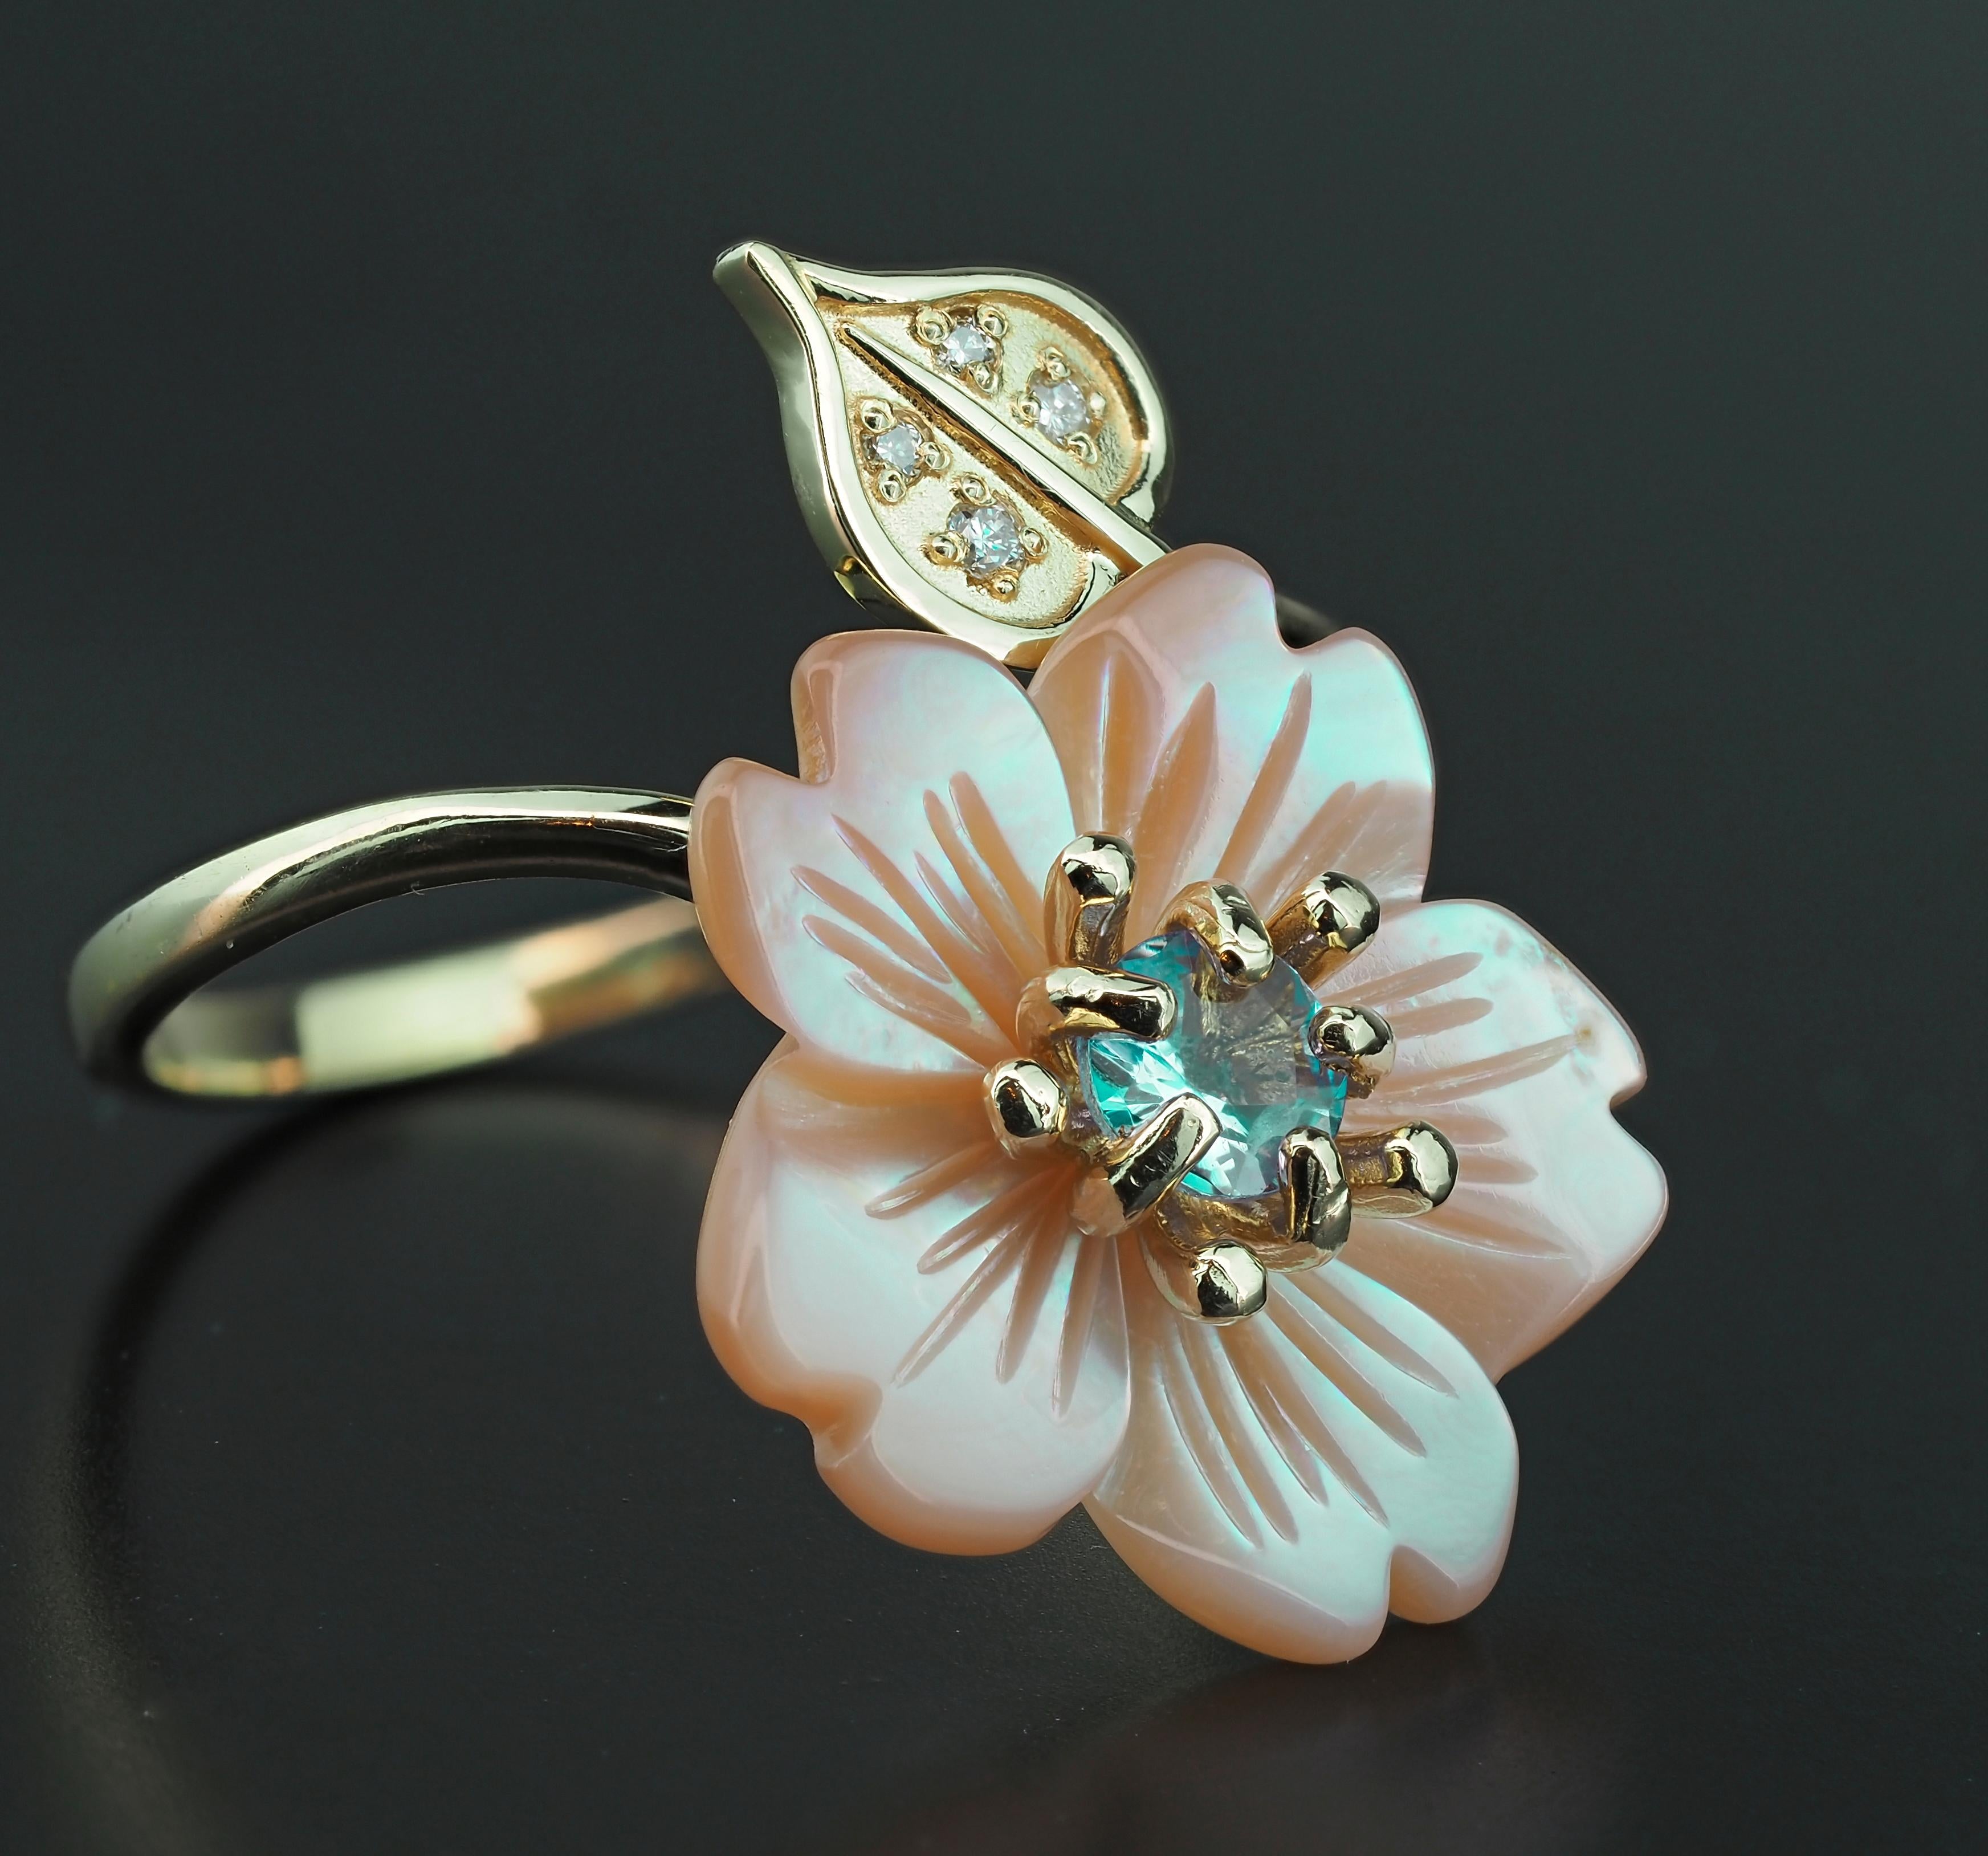 For Sale:  Carved Flower 14k ring with gemstones.  2